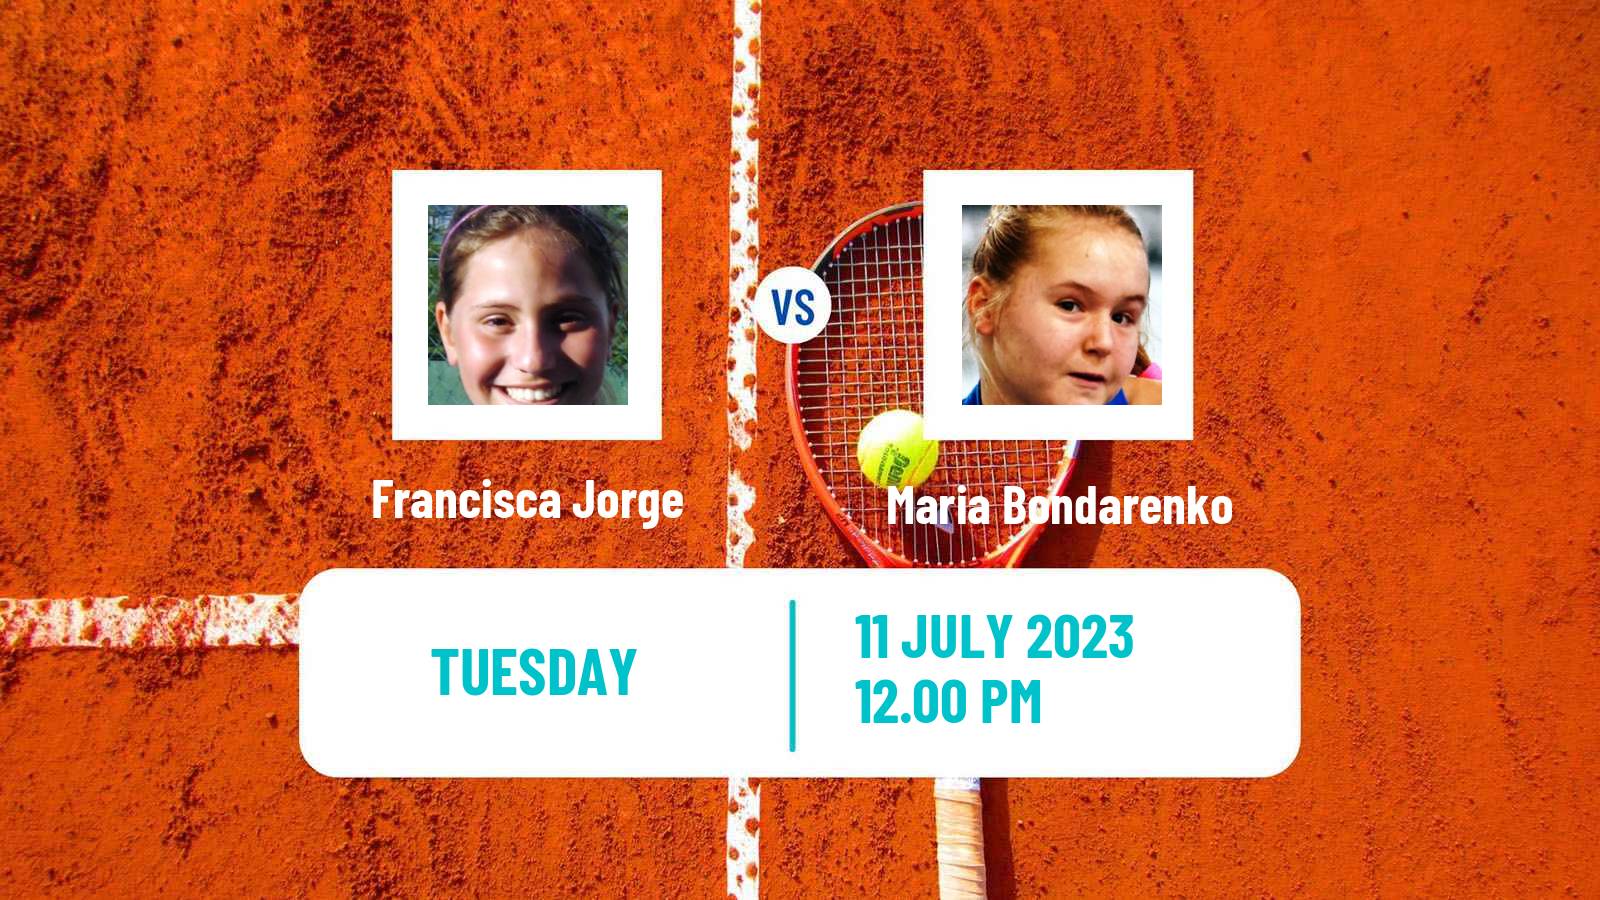 Tennis ITF W25 Corroios Seixal Women Francisca Jorge - Maria Bondarenko